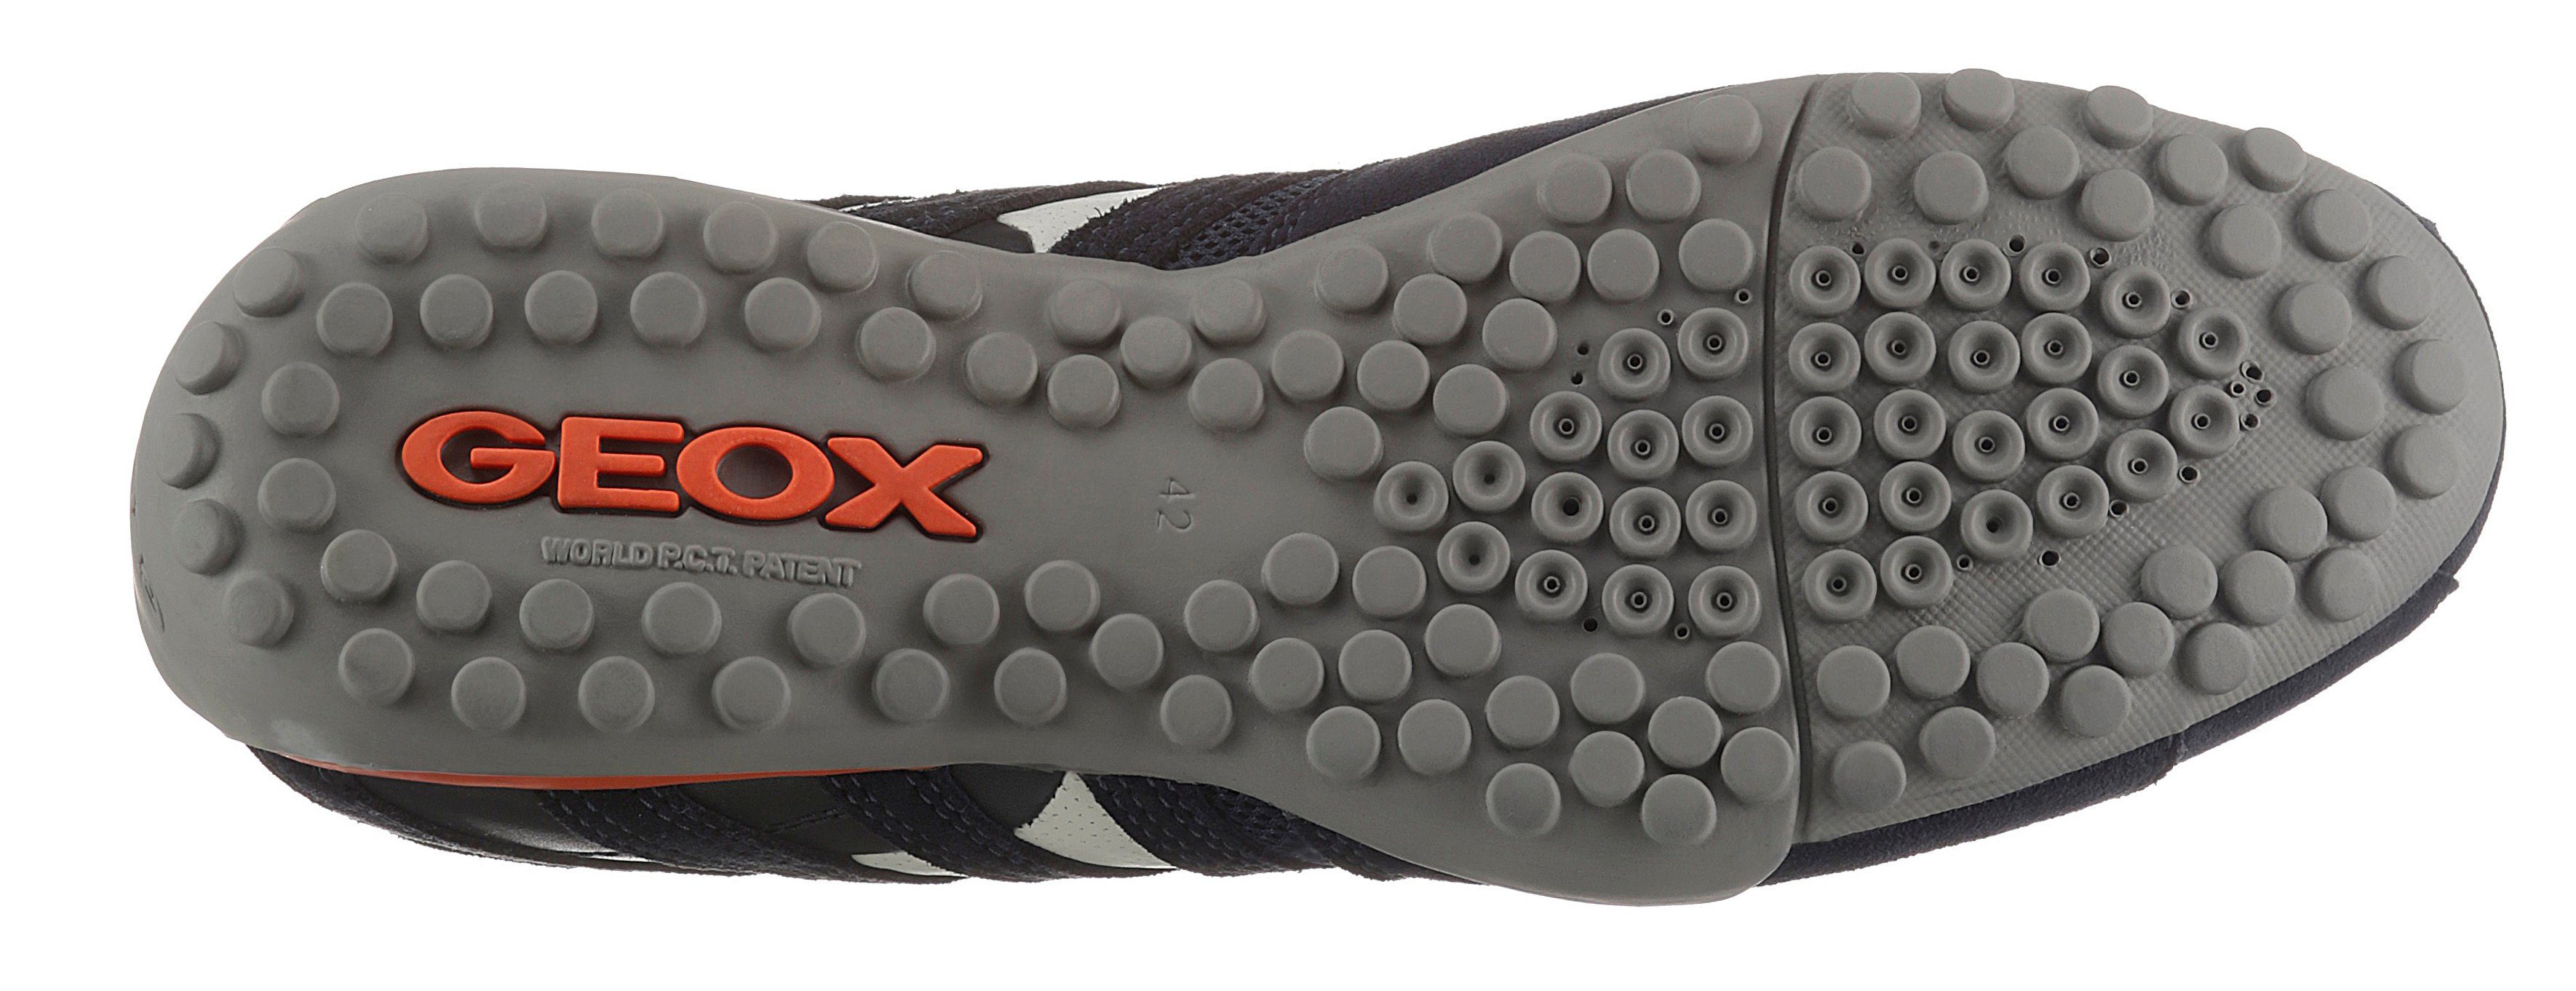 Geox Snake Sneaker im Materialmix dunkelblau mit Geox Membrane Spezial